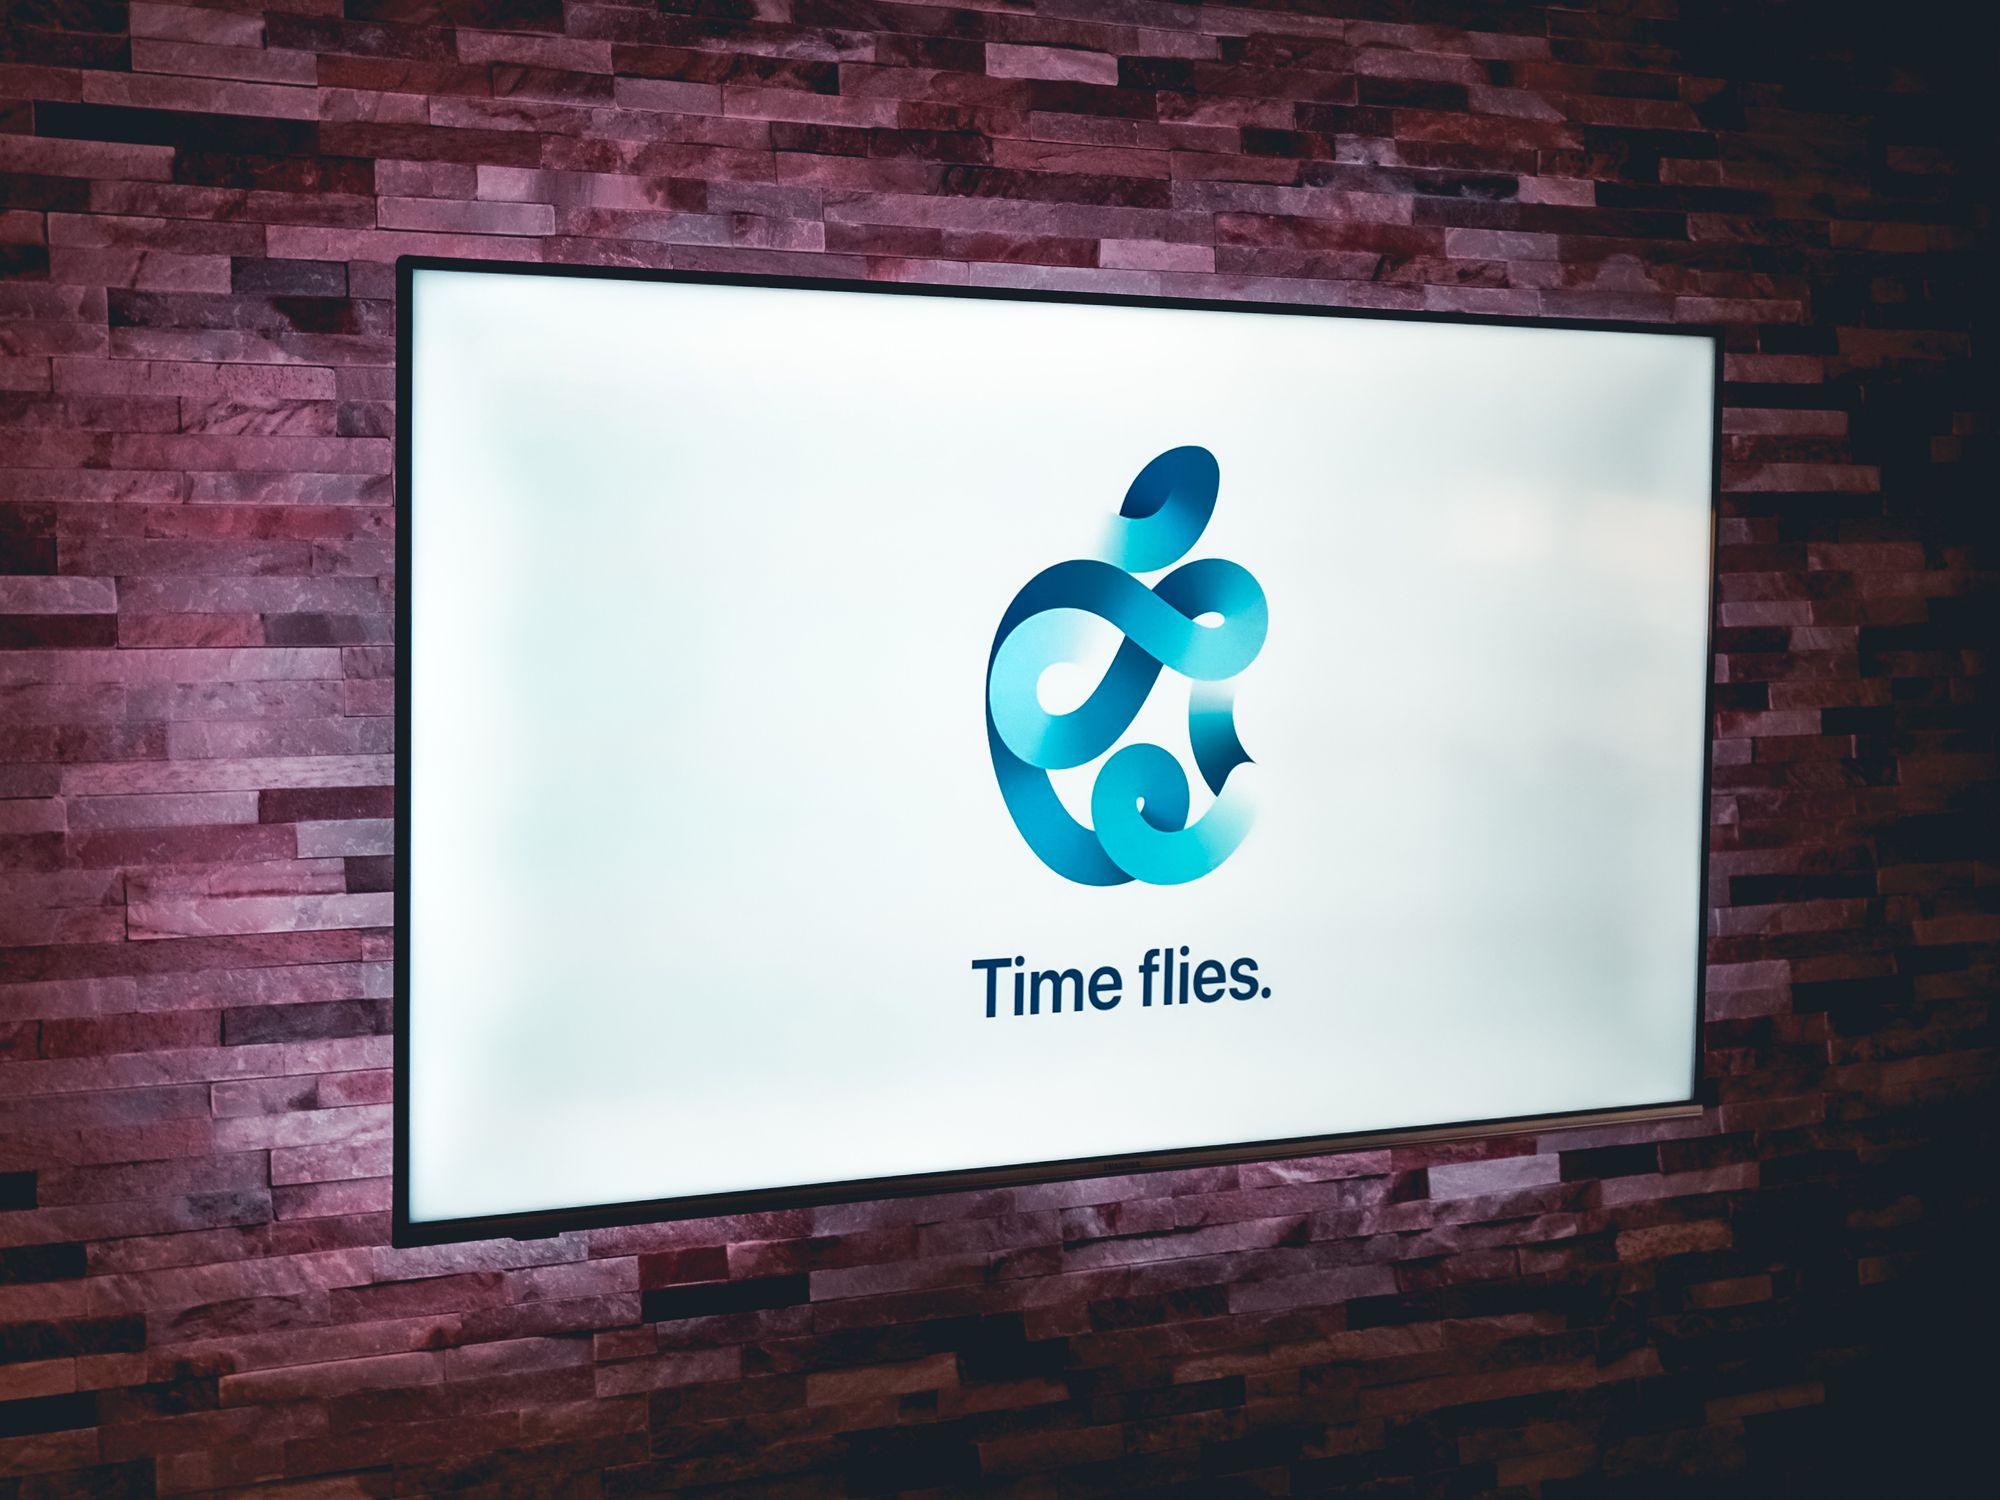 Como poderás assistir ao evento “Time Flies” da Apple? post image